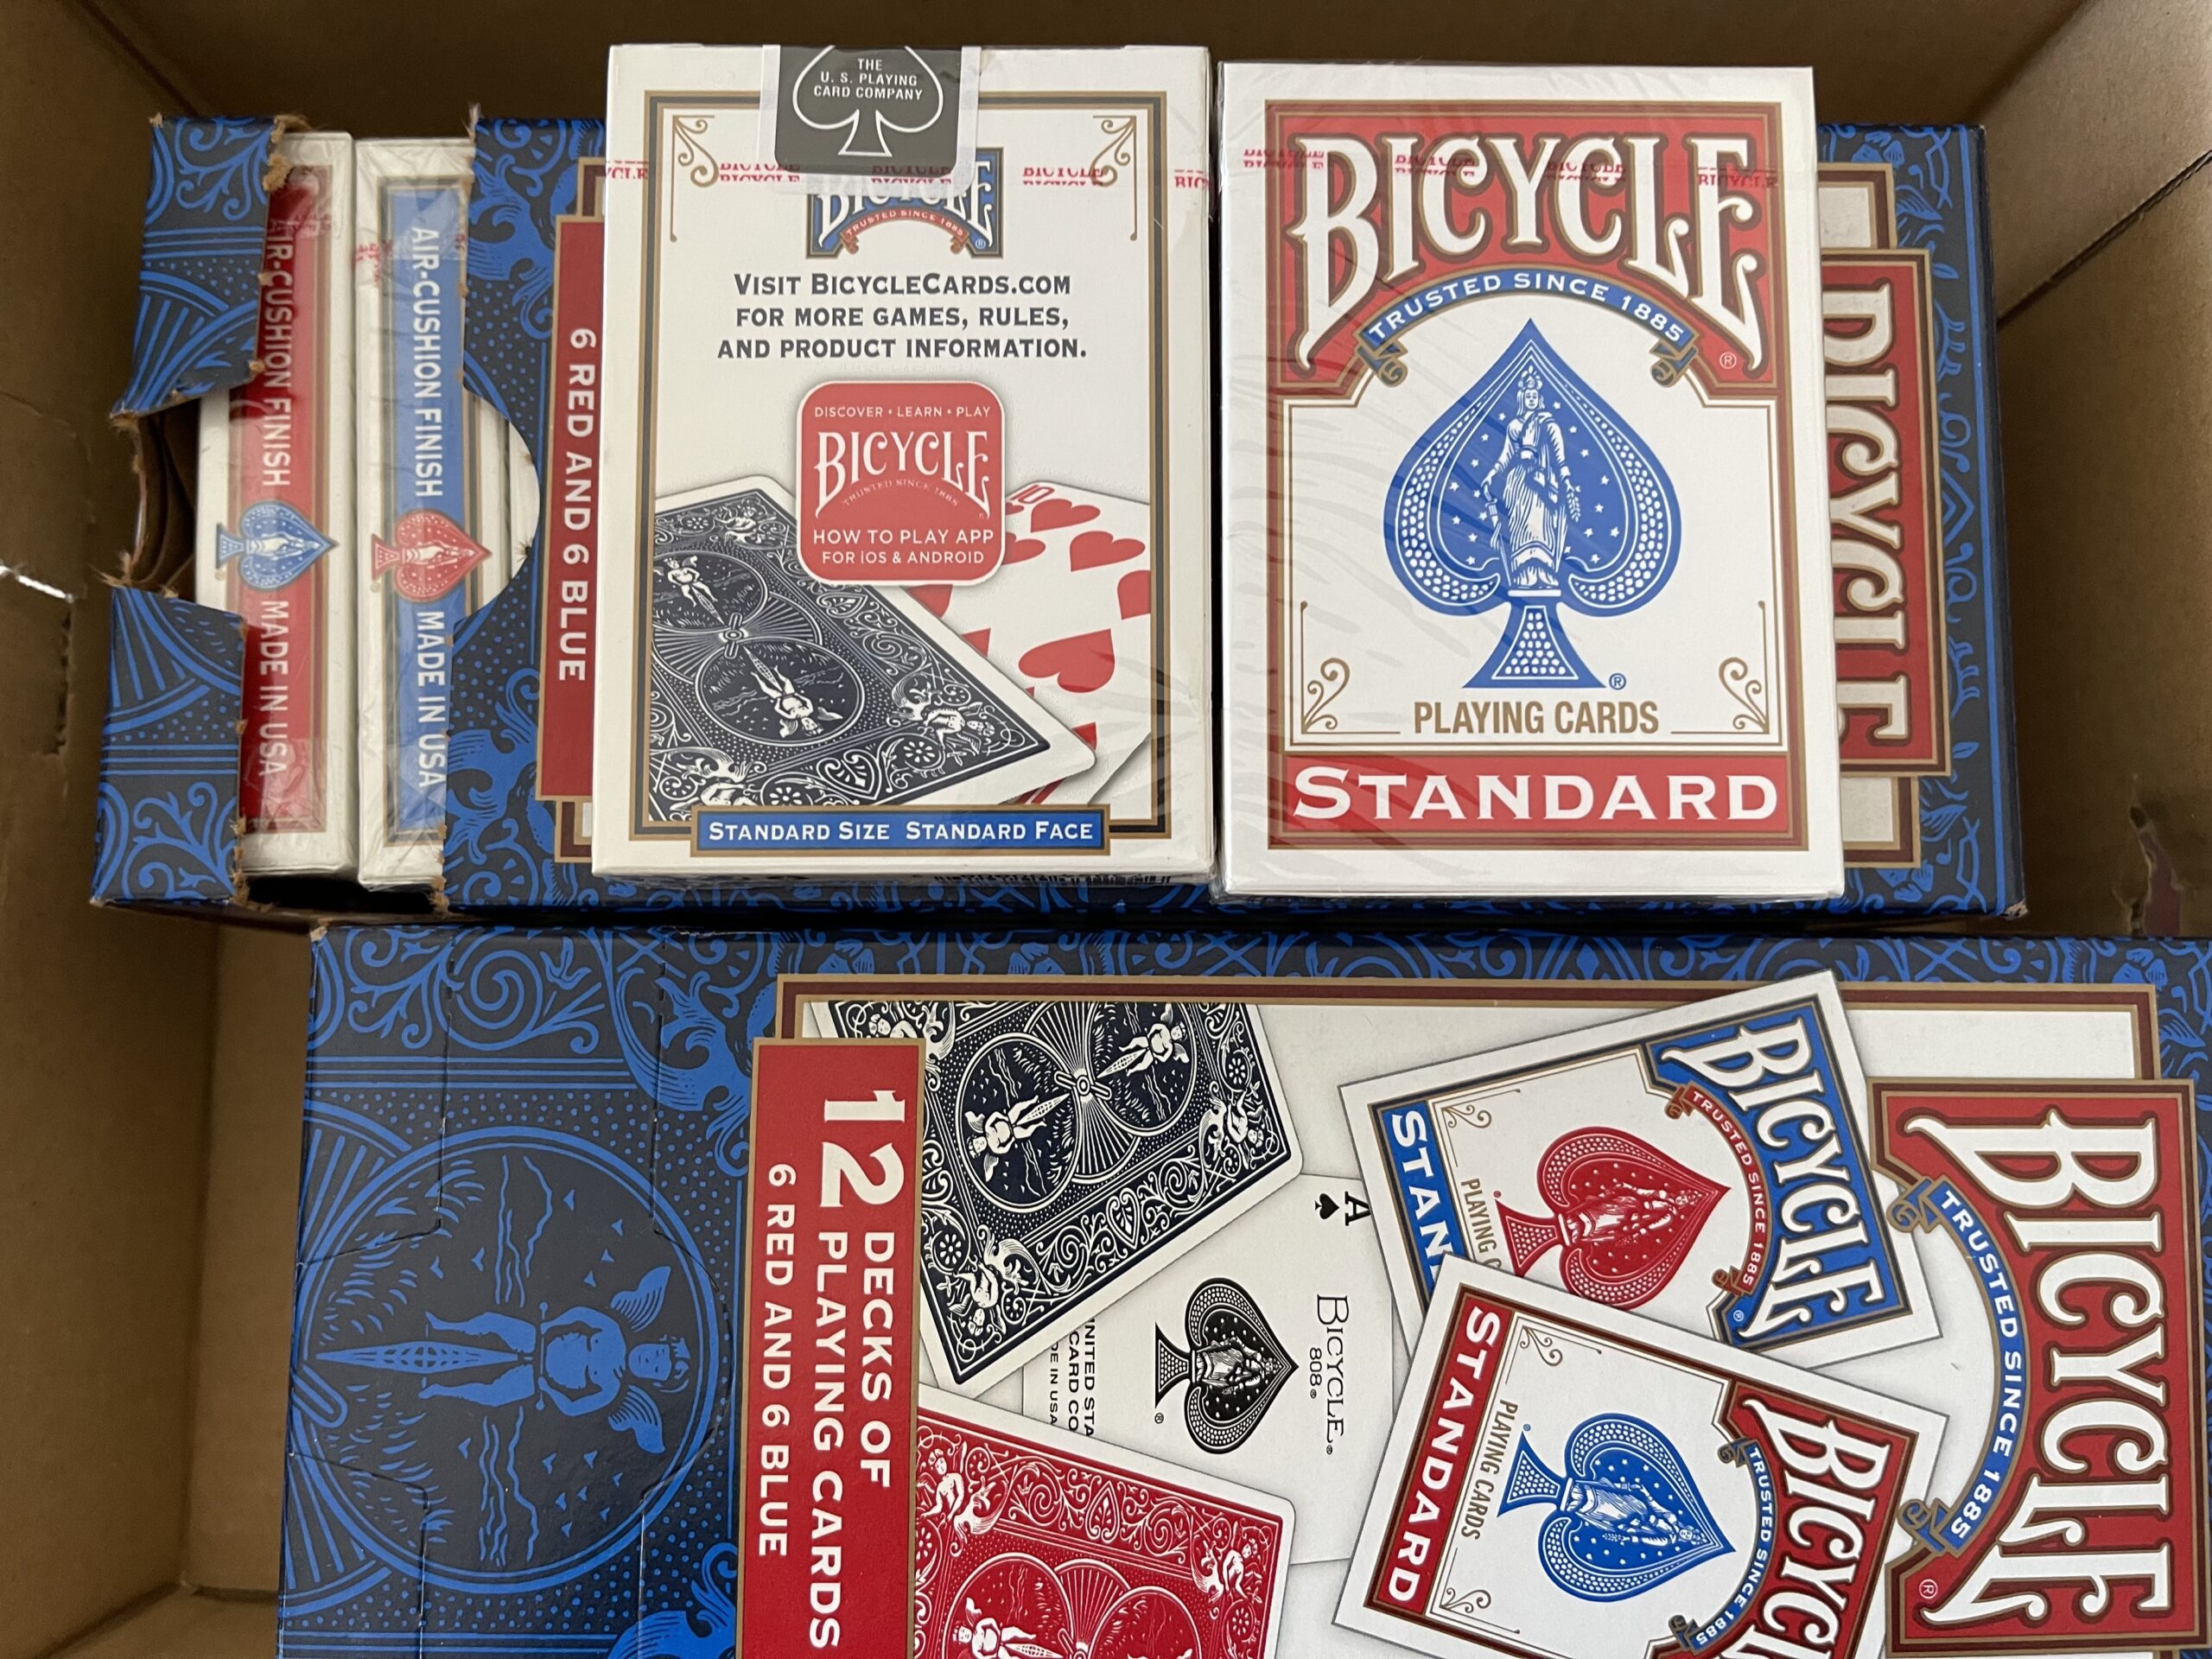 Bicycle トランプ ポーカーサイズ 12パック Amazon日本で購入